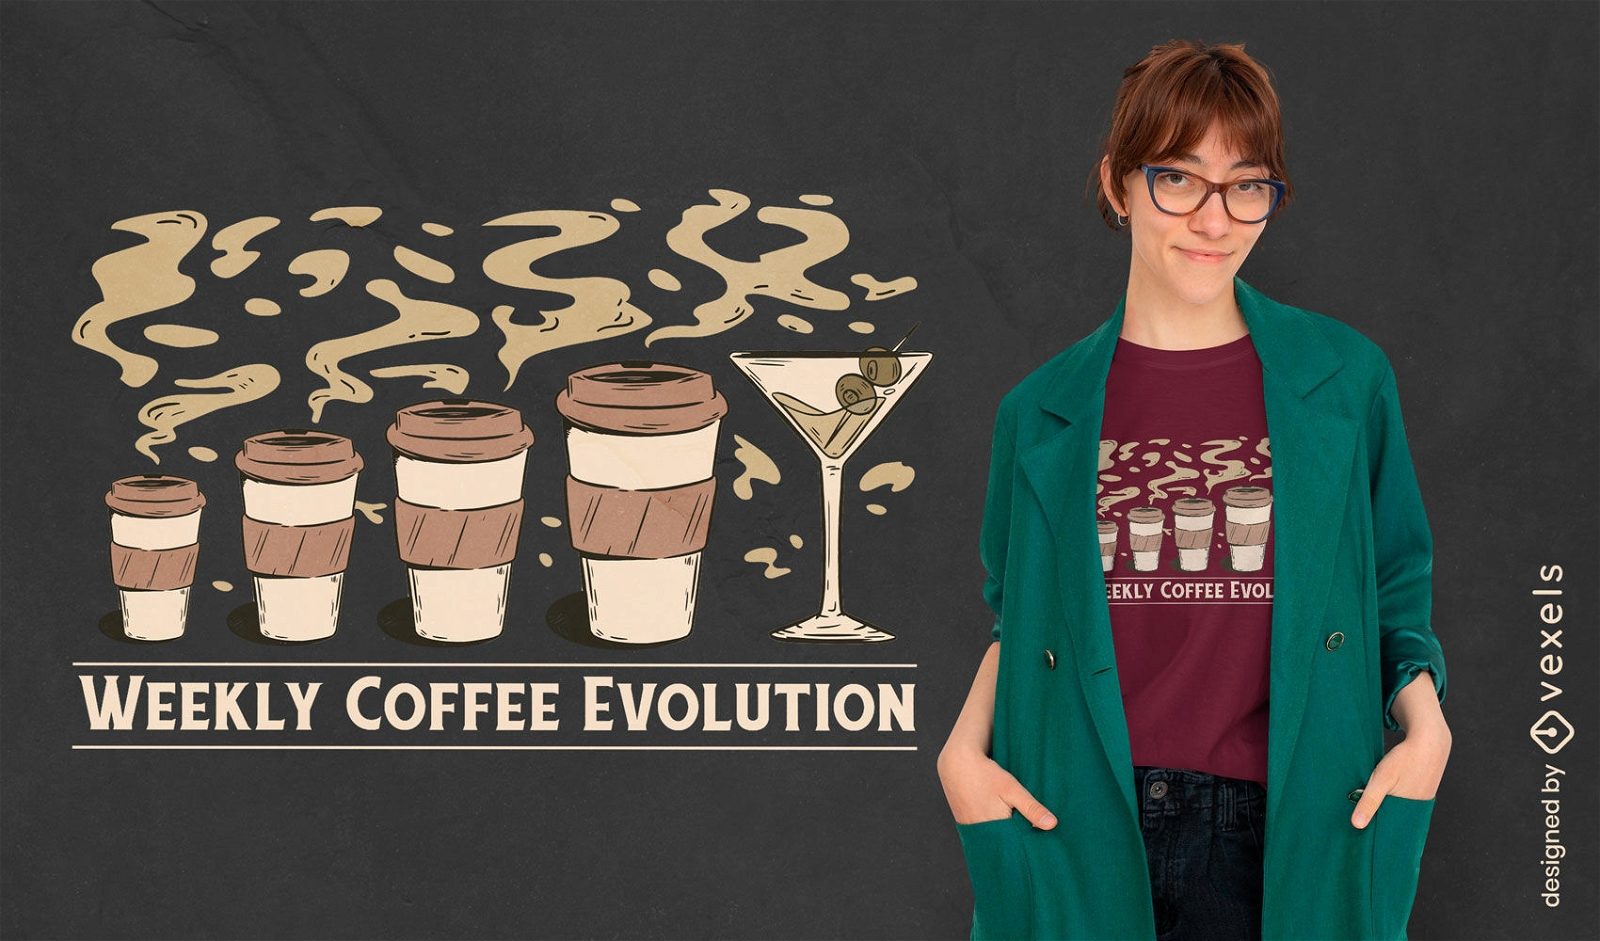 Dise?o de camiseta de evoluci?n de bebida de caf?.